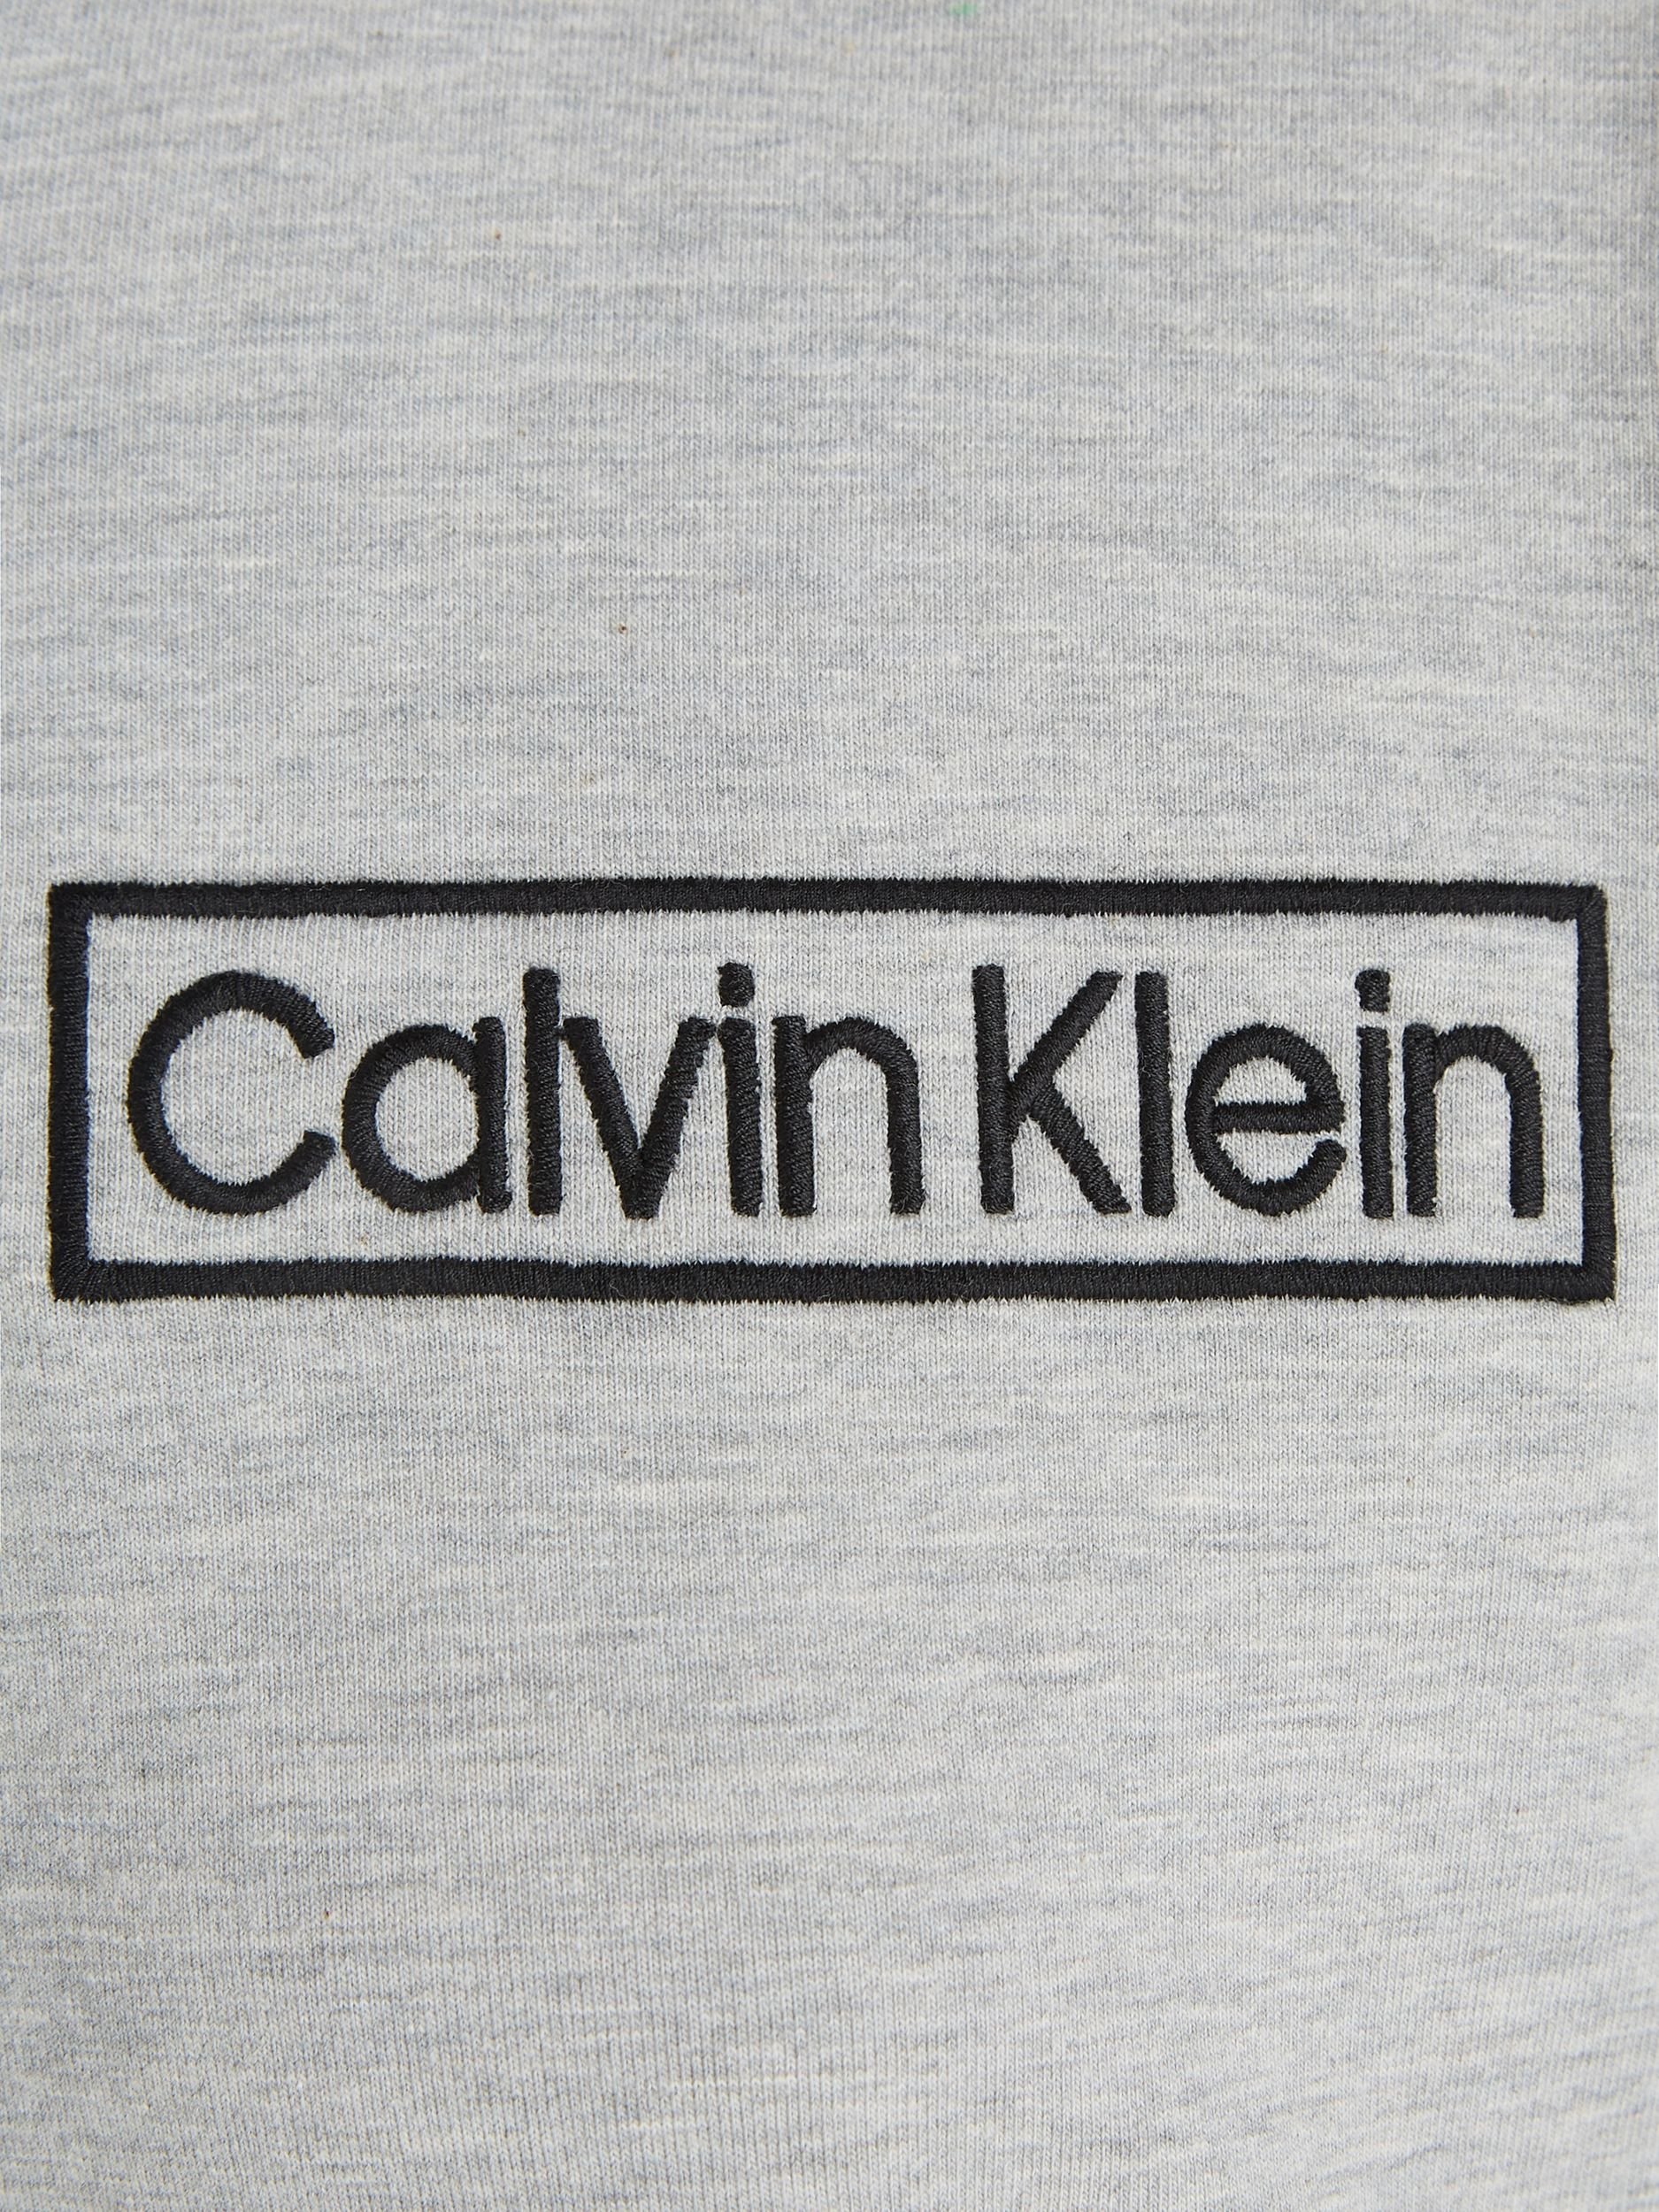 Calvin Klein Sweatjacke 